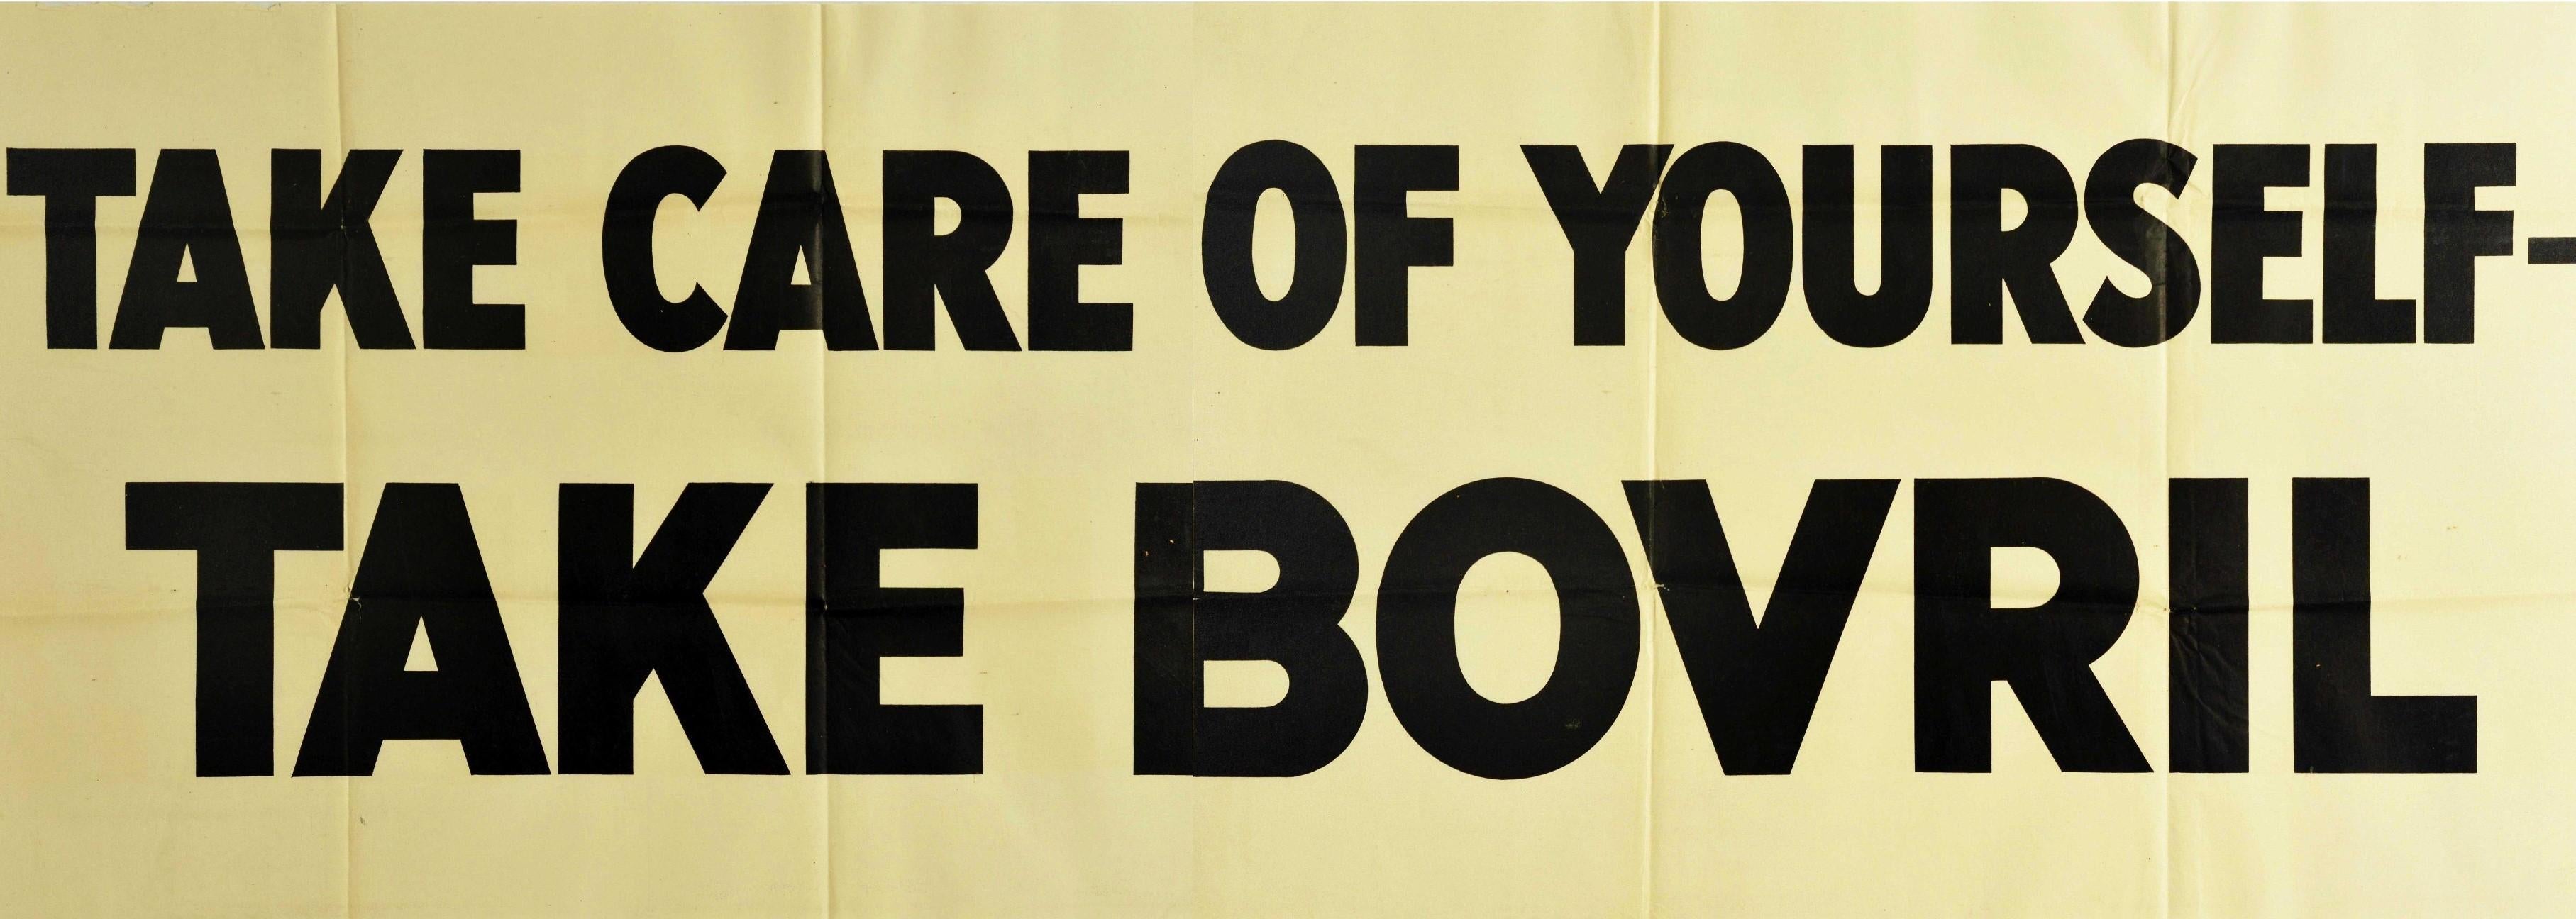 British Original Vintage Poster Take Care Of Yourself Take Bovril Beef Soup Drink Food